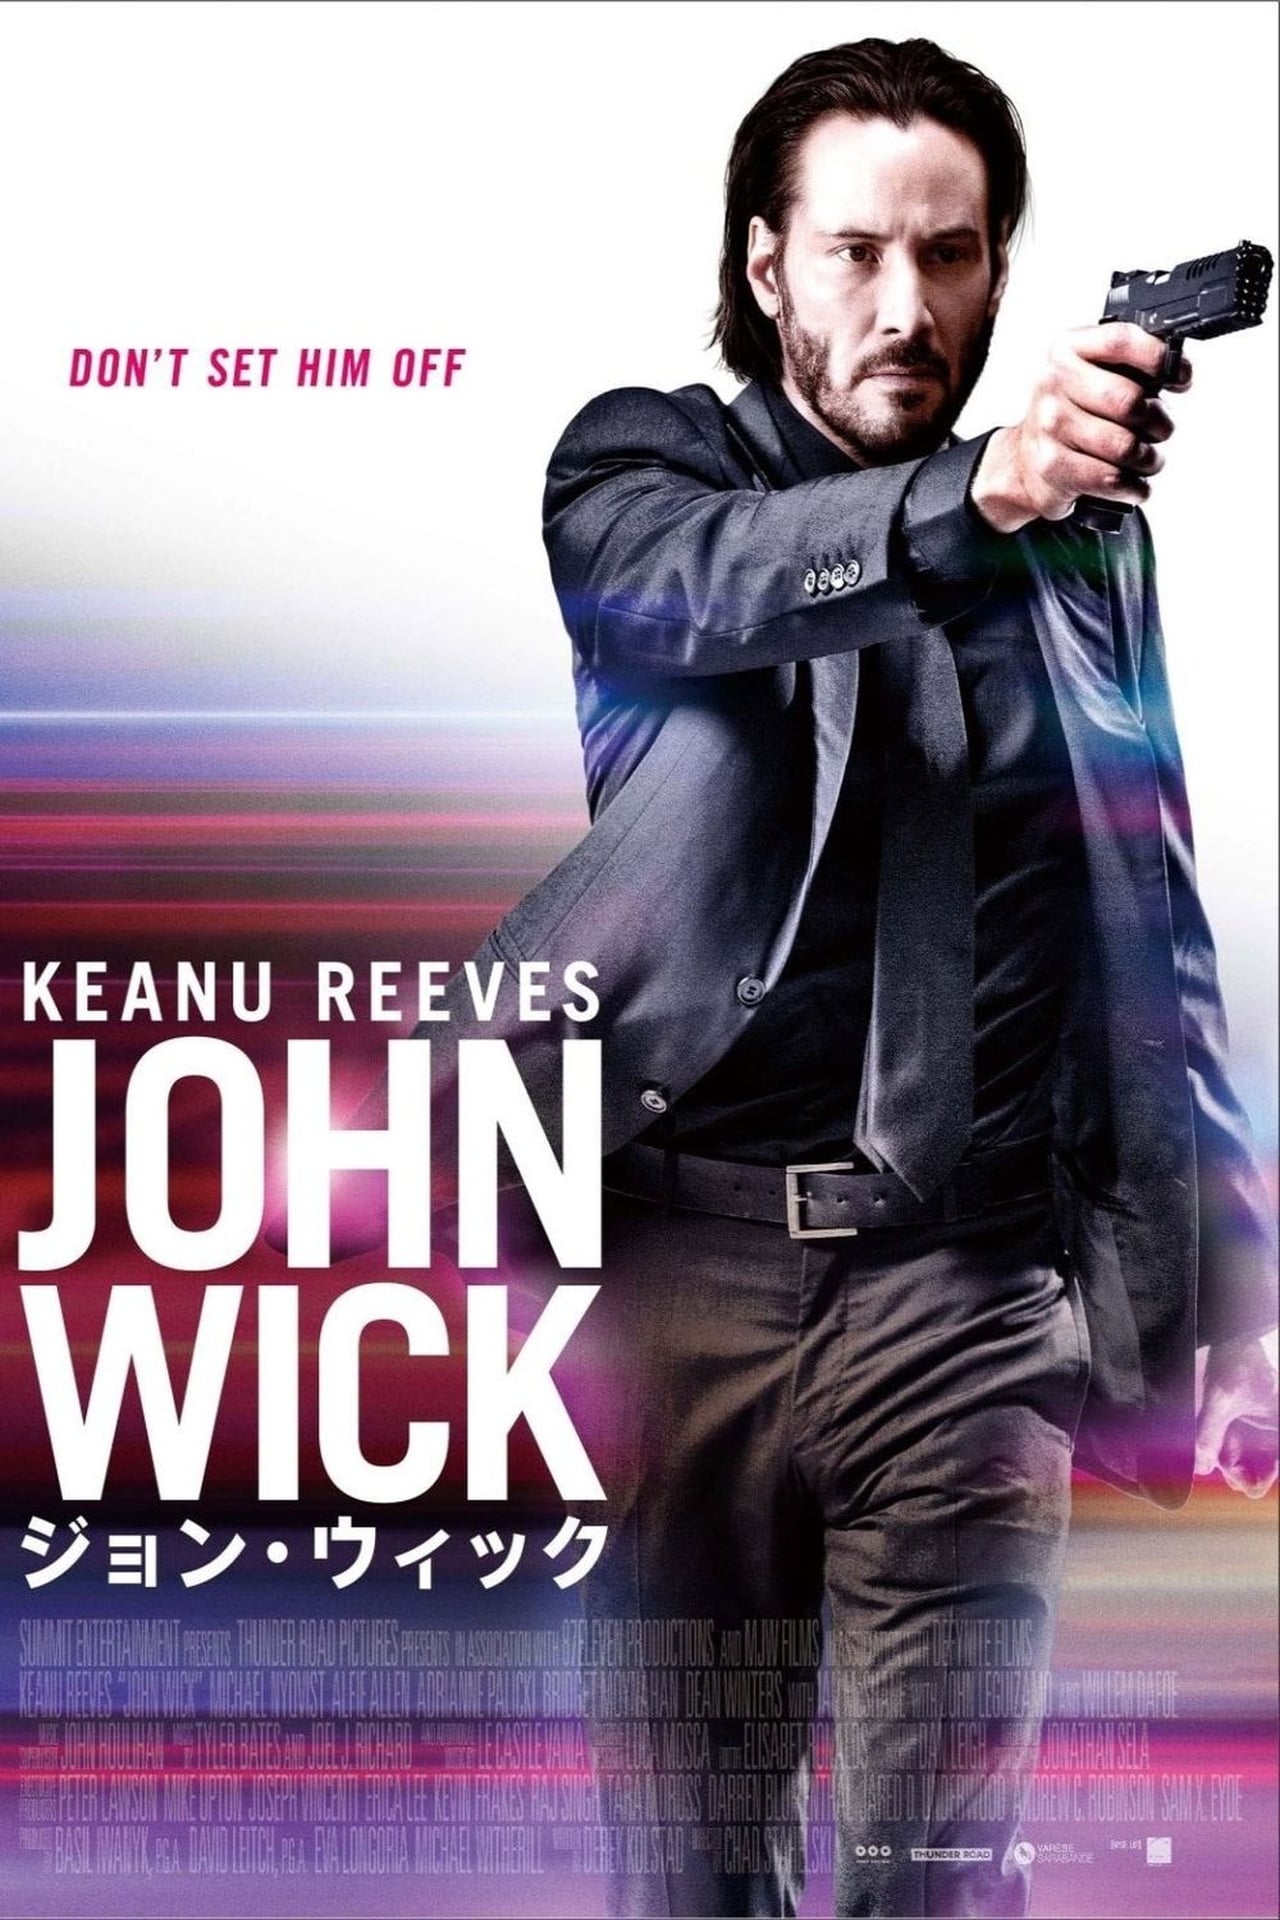 Watch John Wick (2014) Online Full Movies at film.movieonrails.com